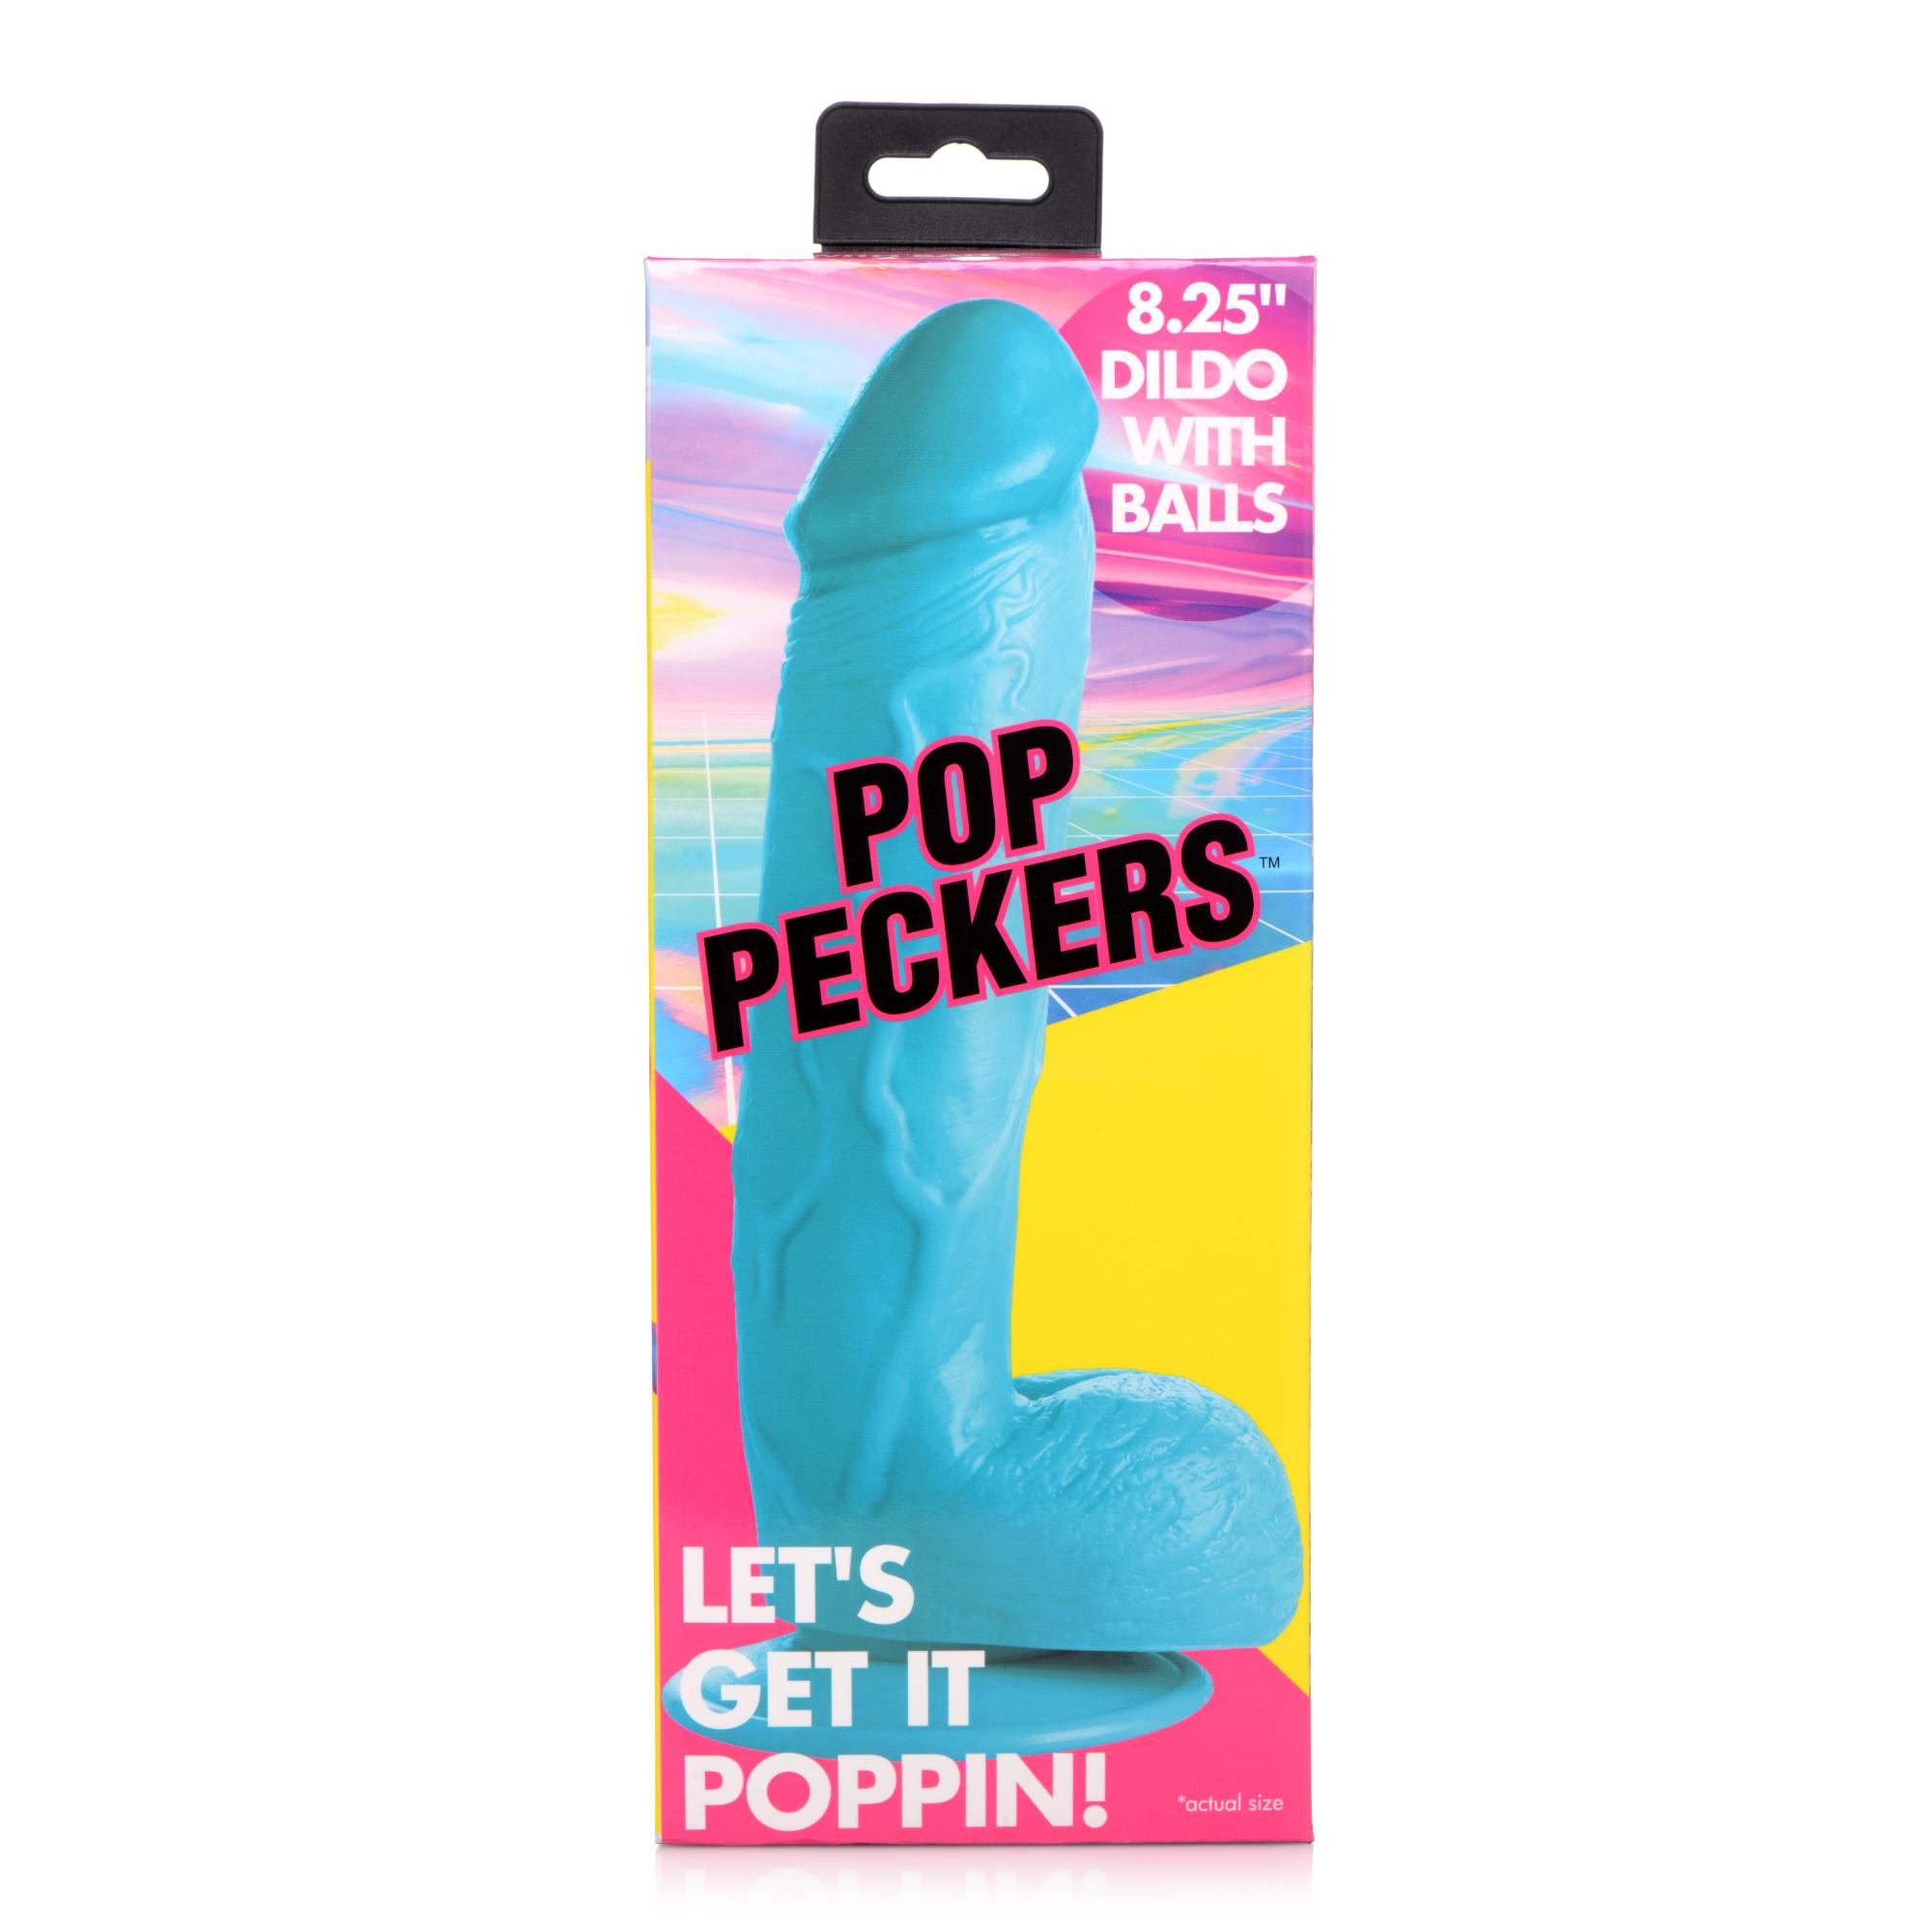 Pop Peckers 8.25" Dildo with Balls